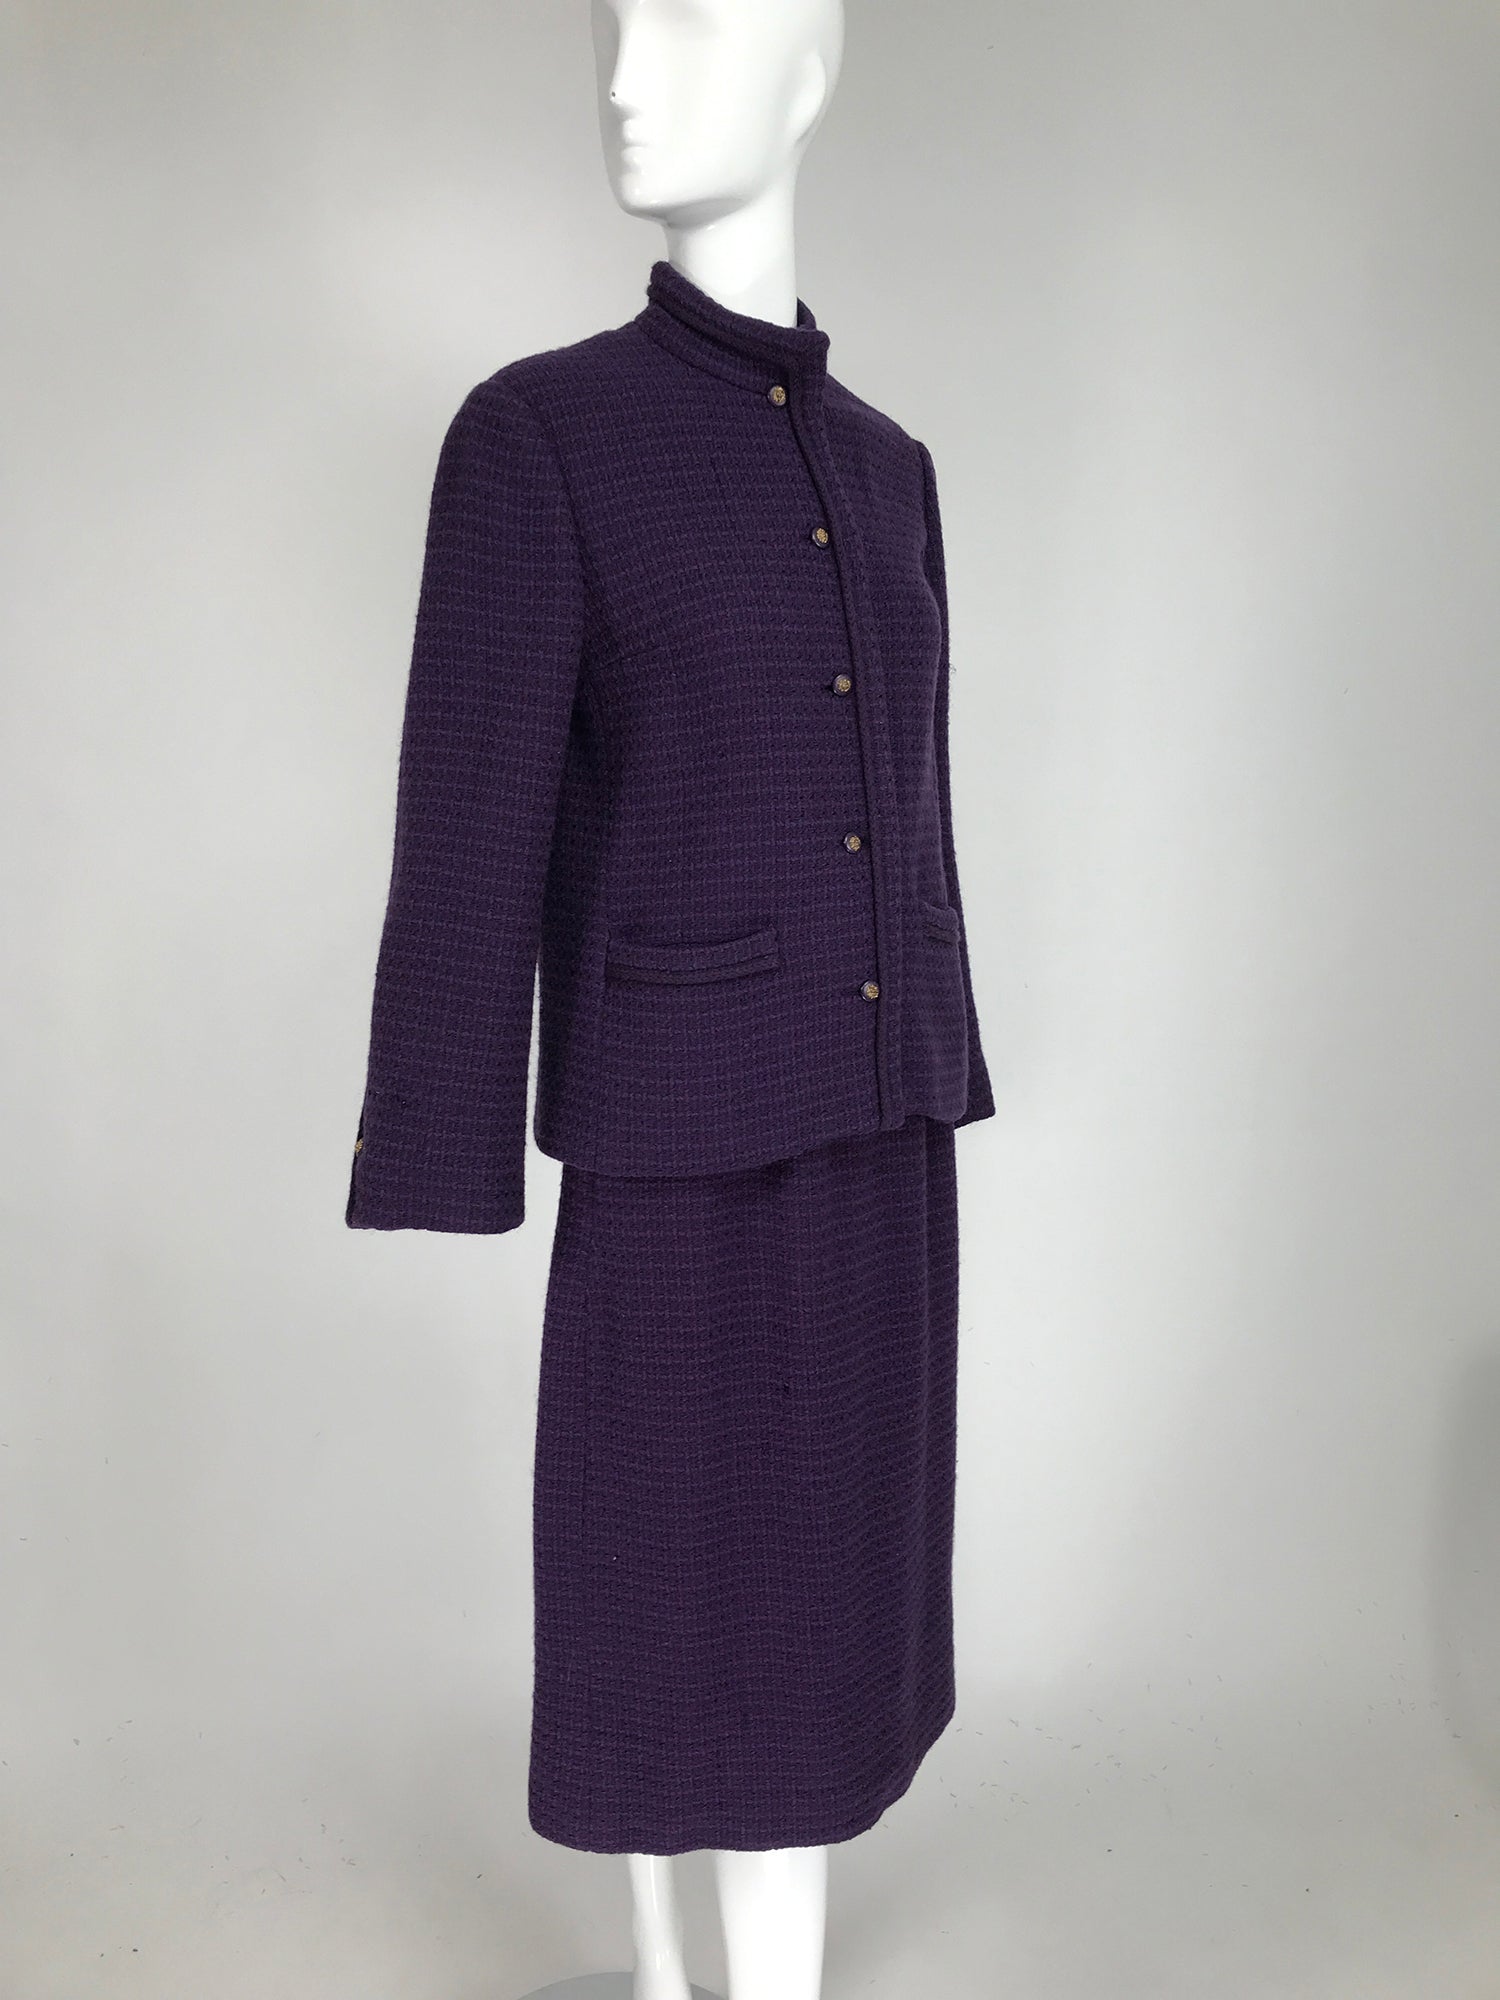 Chanel Vintage 2-Piece Jacket and Skirt Suit Set